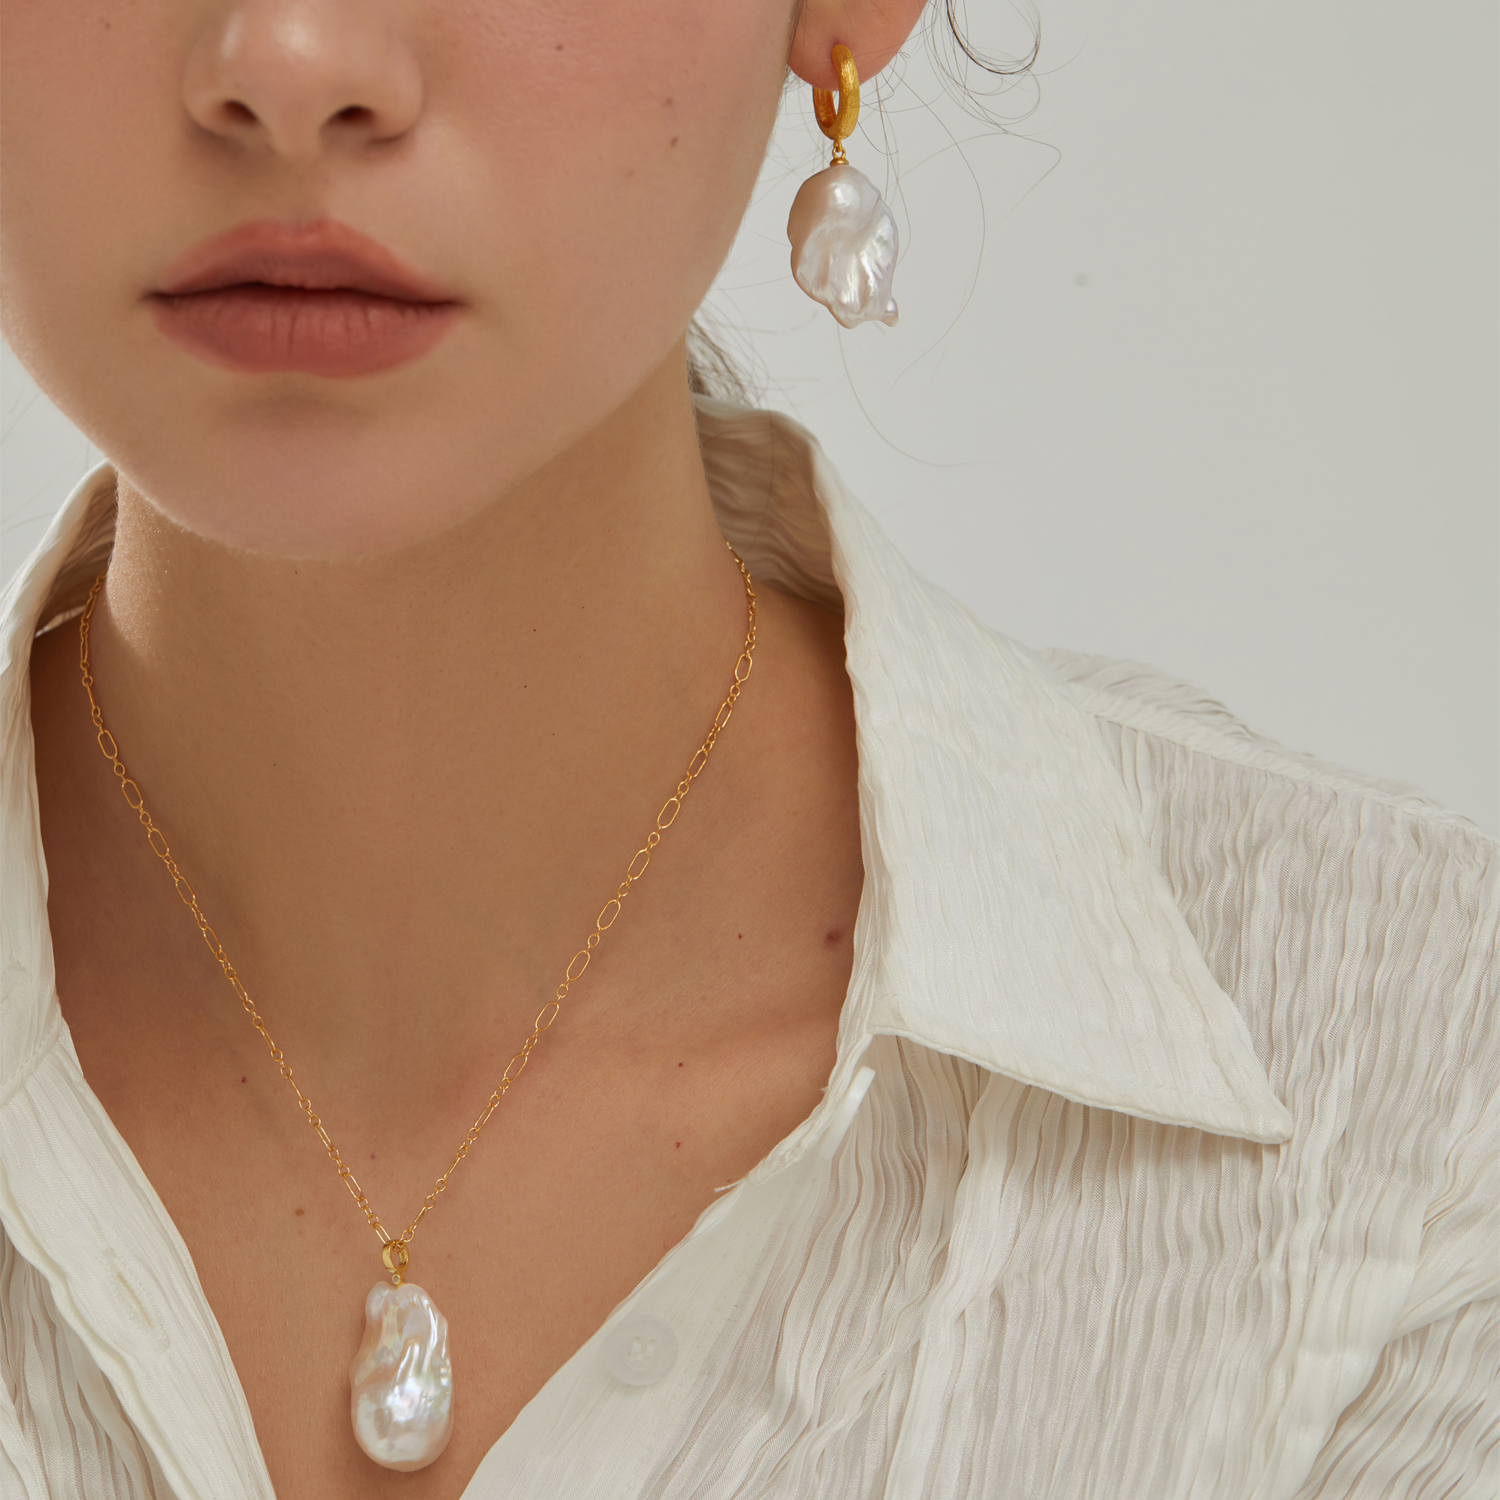 White Baroque Pearl Drop Earrings with Flower Top, Vermeil